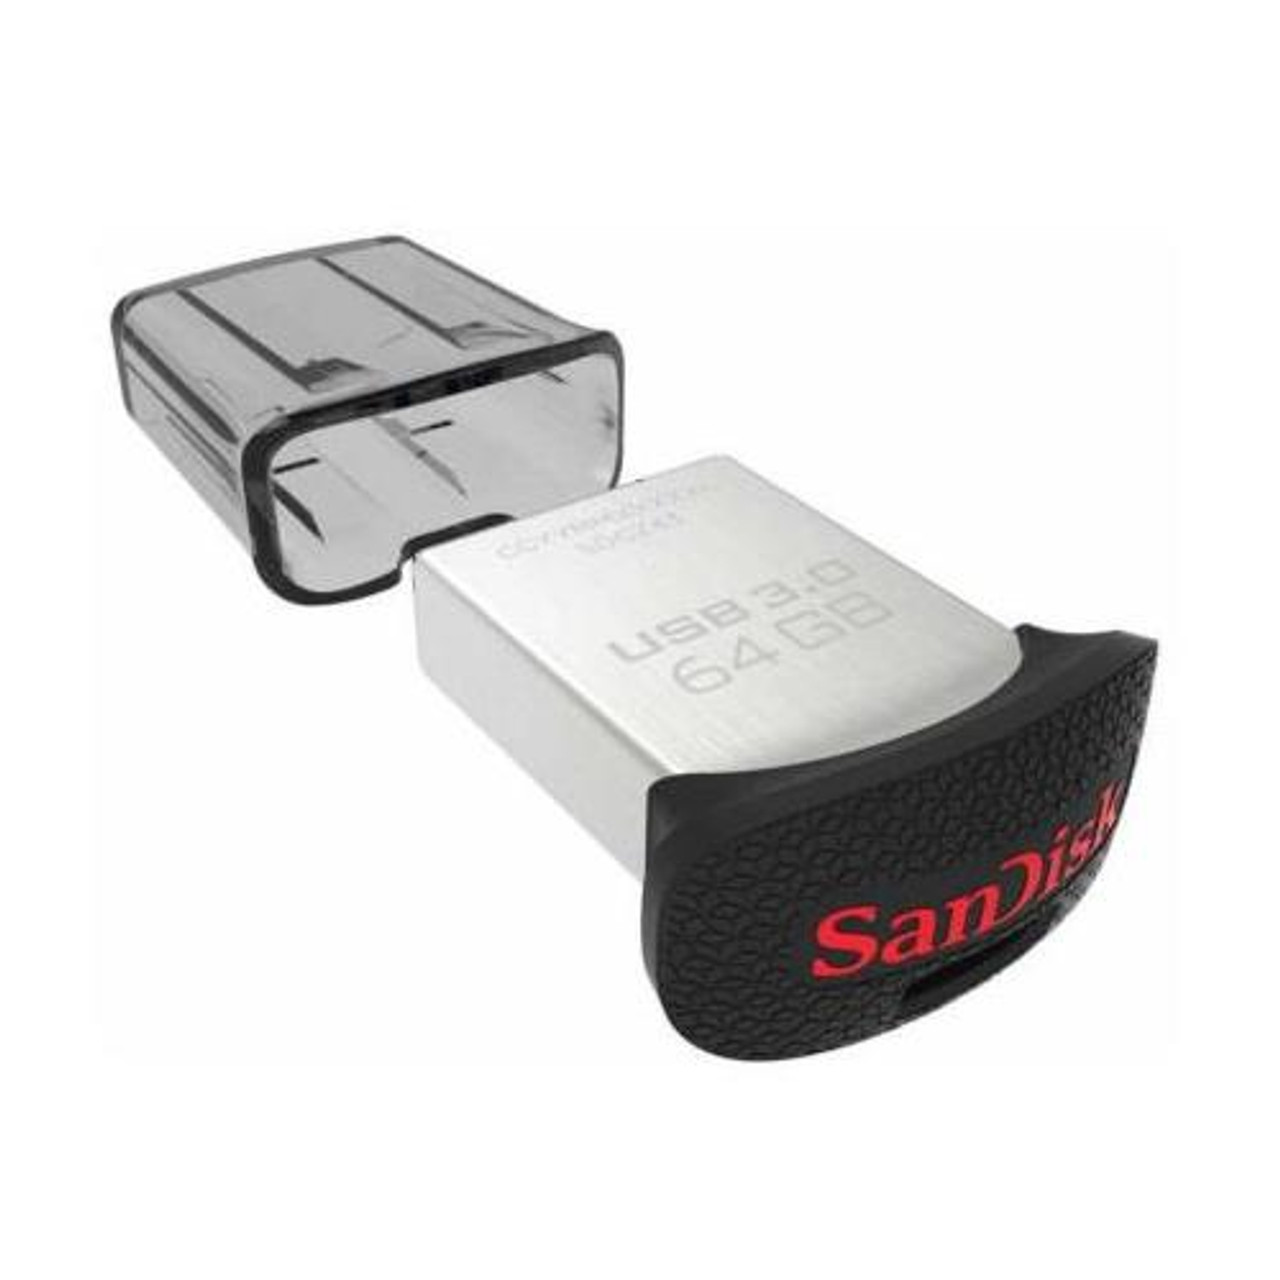 Sandisk Ultra Fit 128GB USB 3.1 - Pendrive